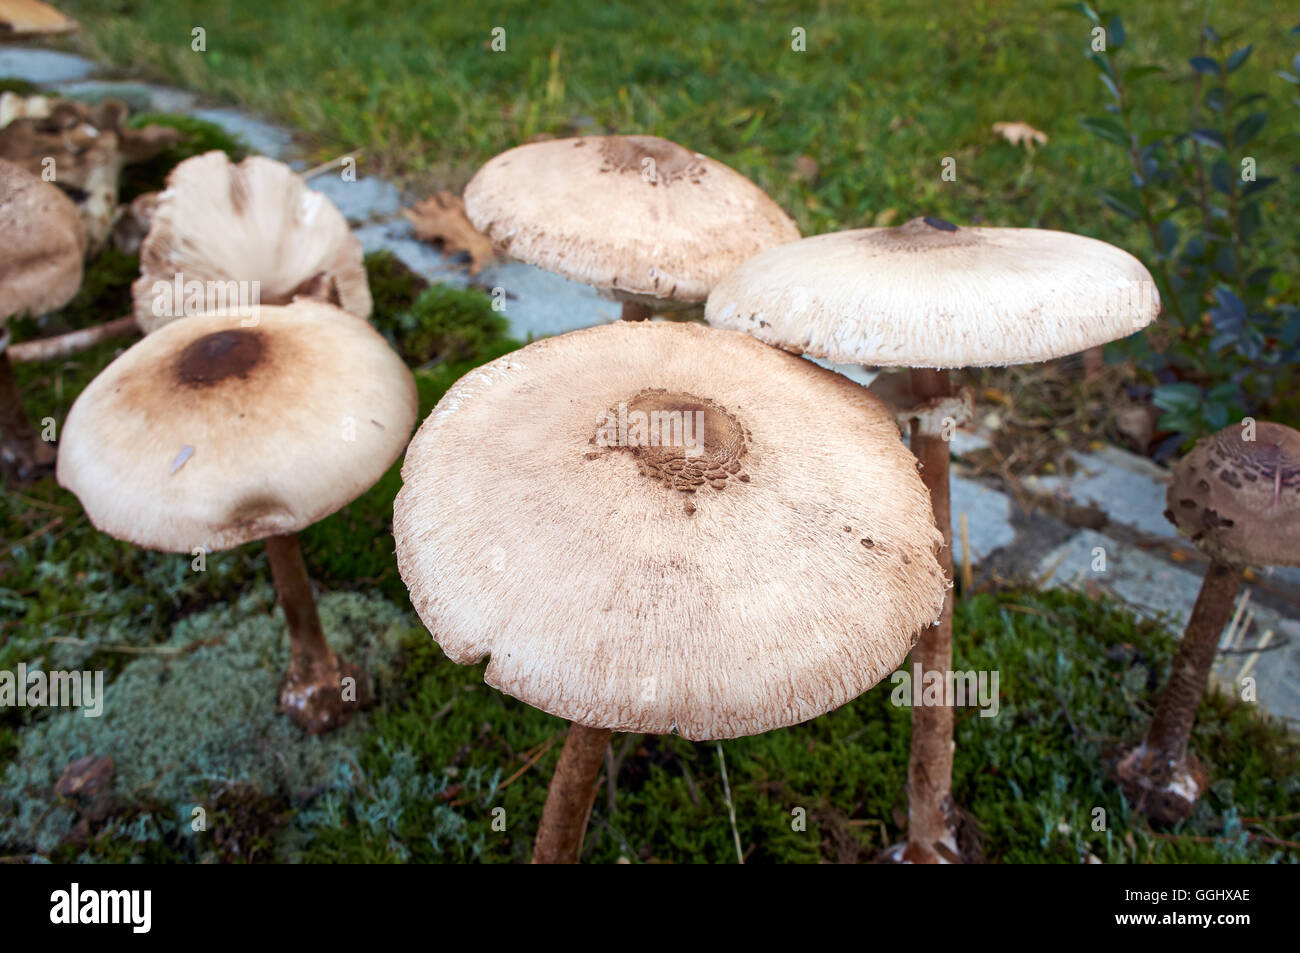 forest mushroom over moss Stock Photo